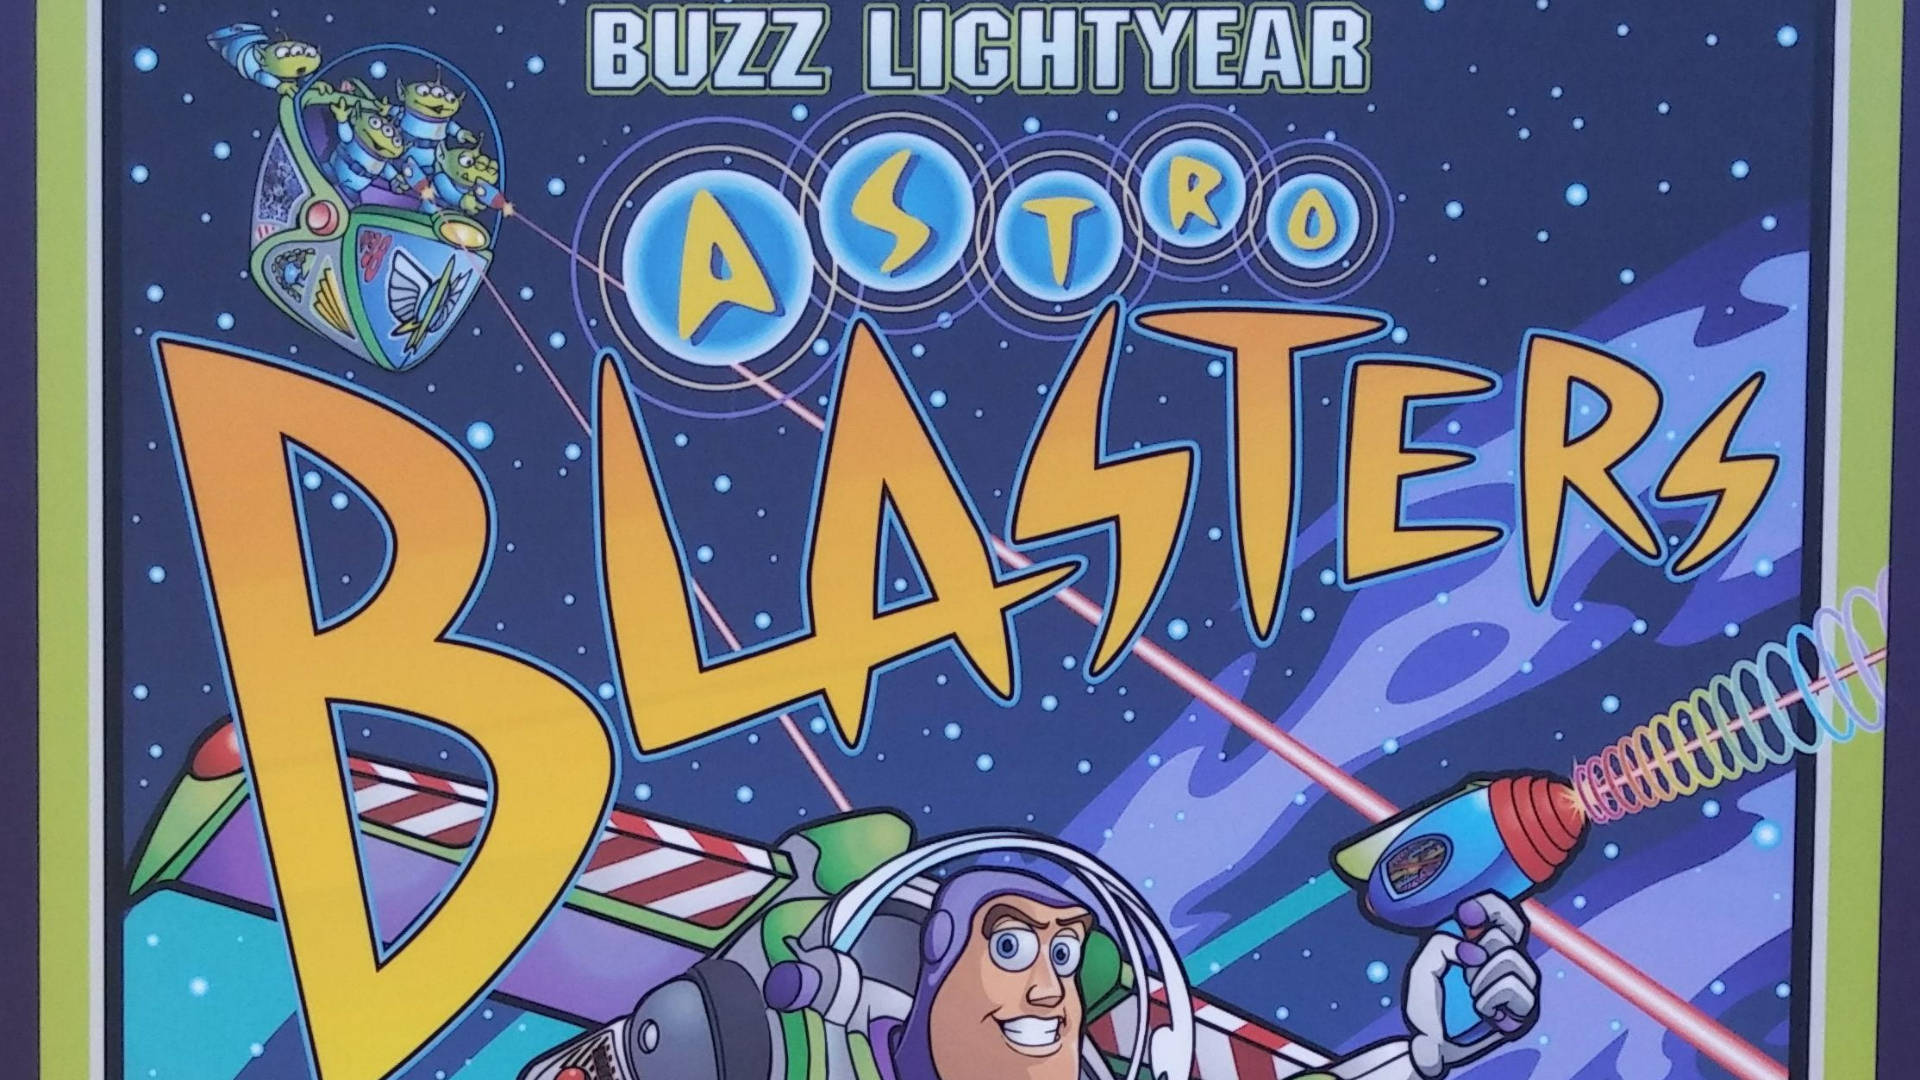 Buzz Lightyear Blasting Off In His Suit. Wallpaper